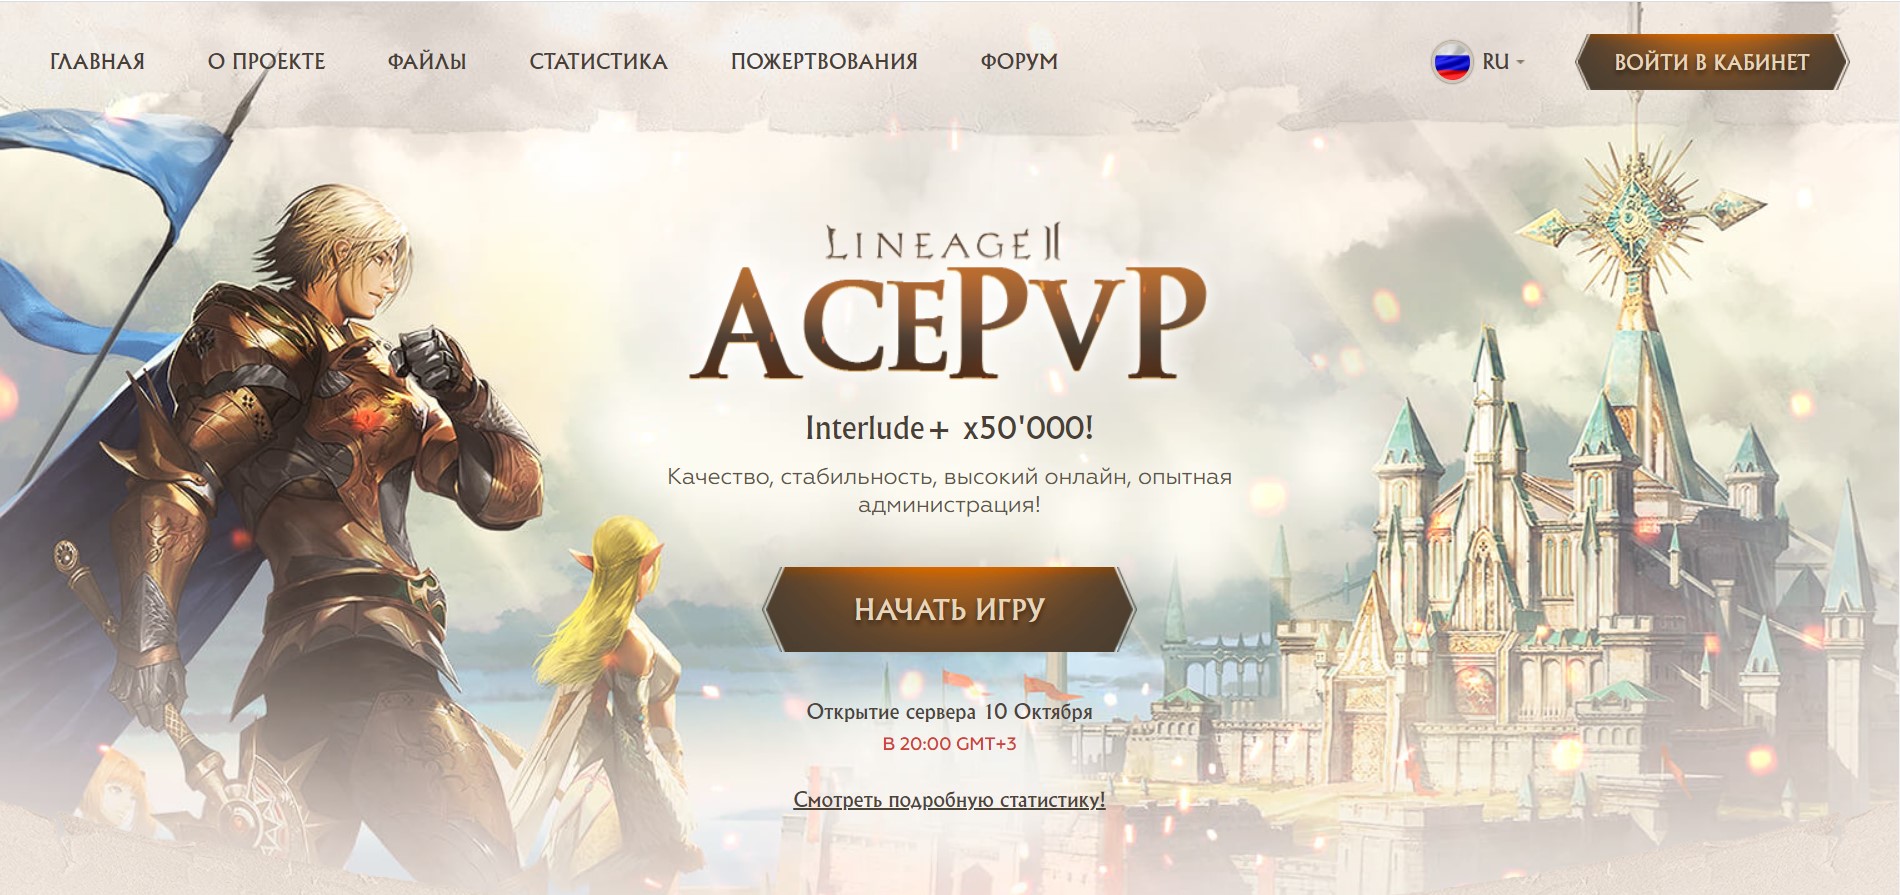 🔥 Acepvp.net Interlude x50000: Embodiment of PvP Adrenaline! ⚔️🔥